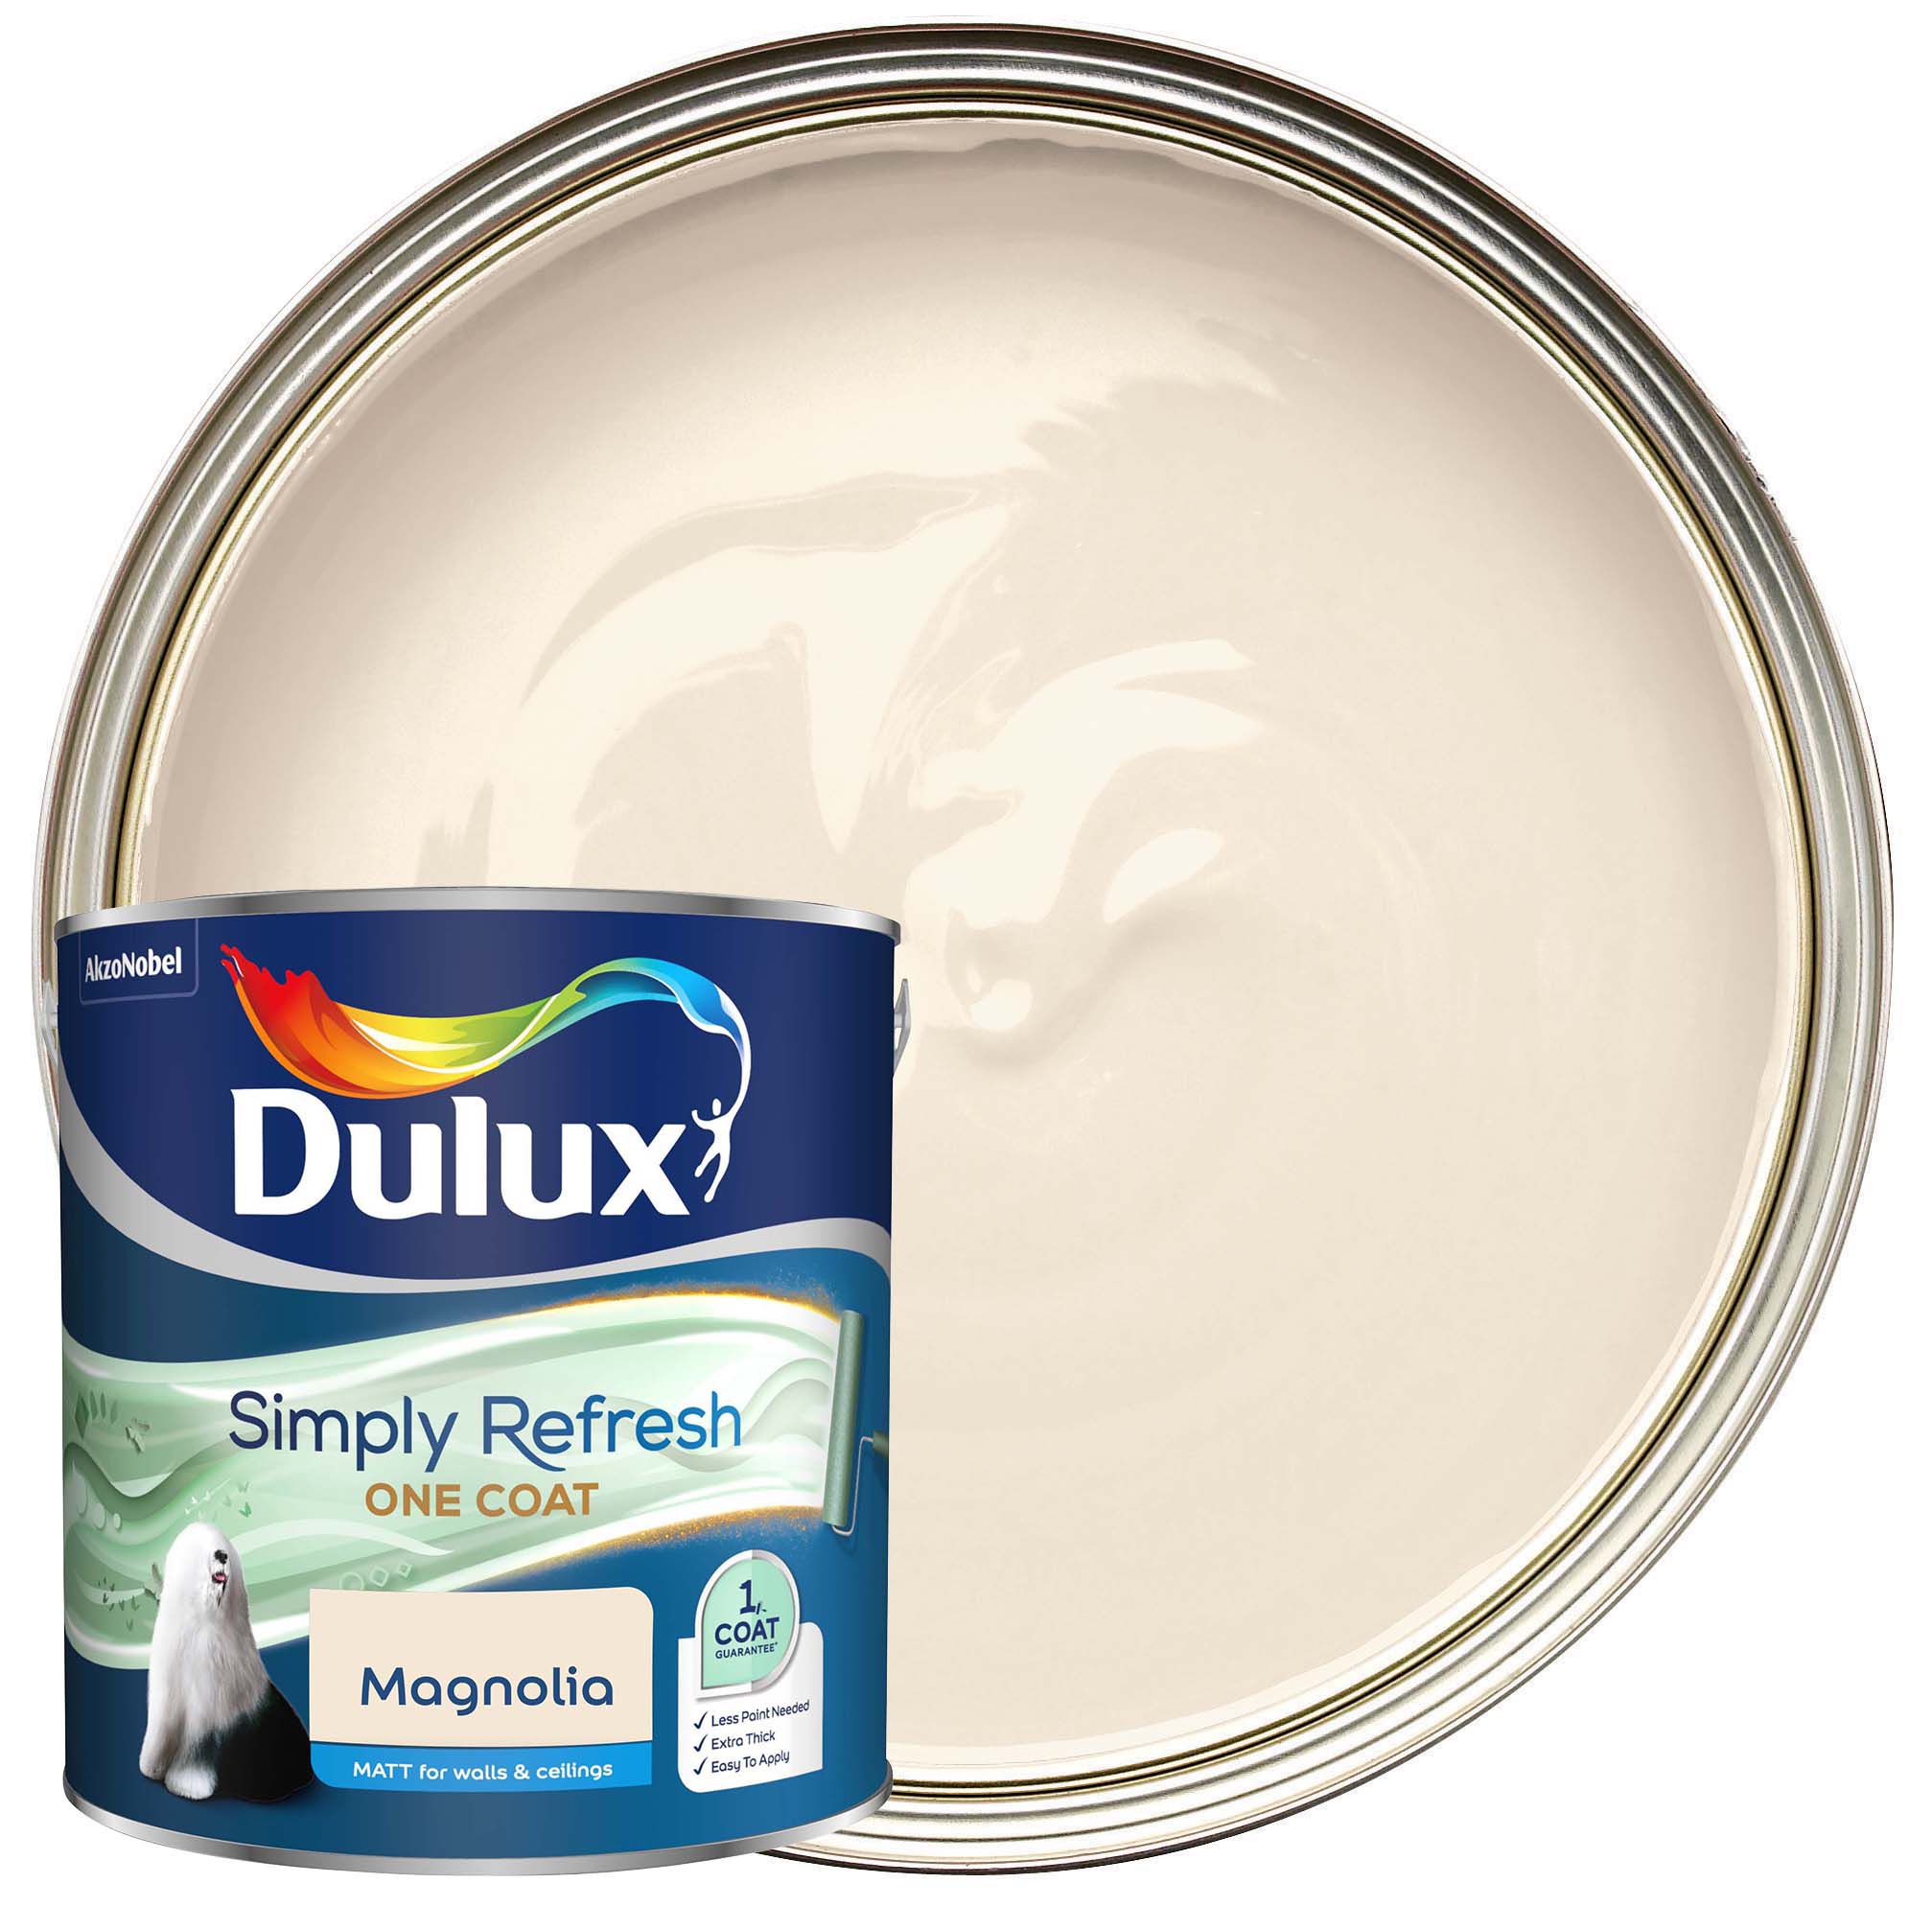 Dulux Simply Refresh One Coat Matt Emulsion Paint - Magnolia - 2.5L